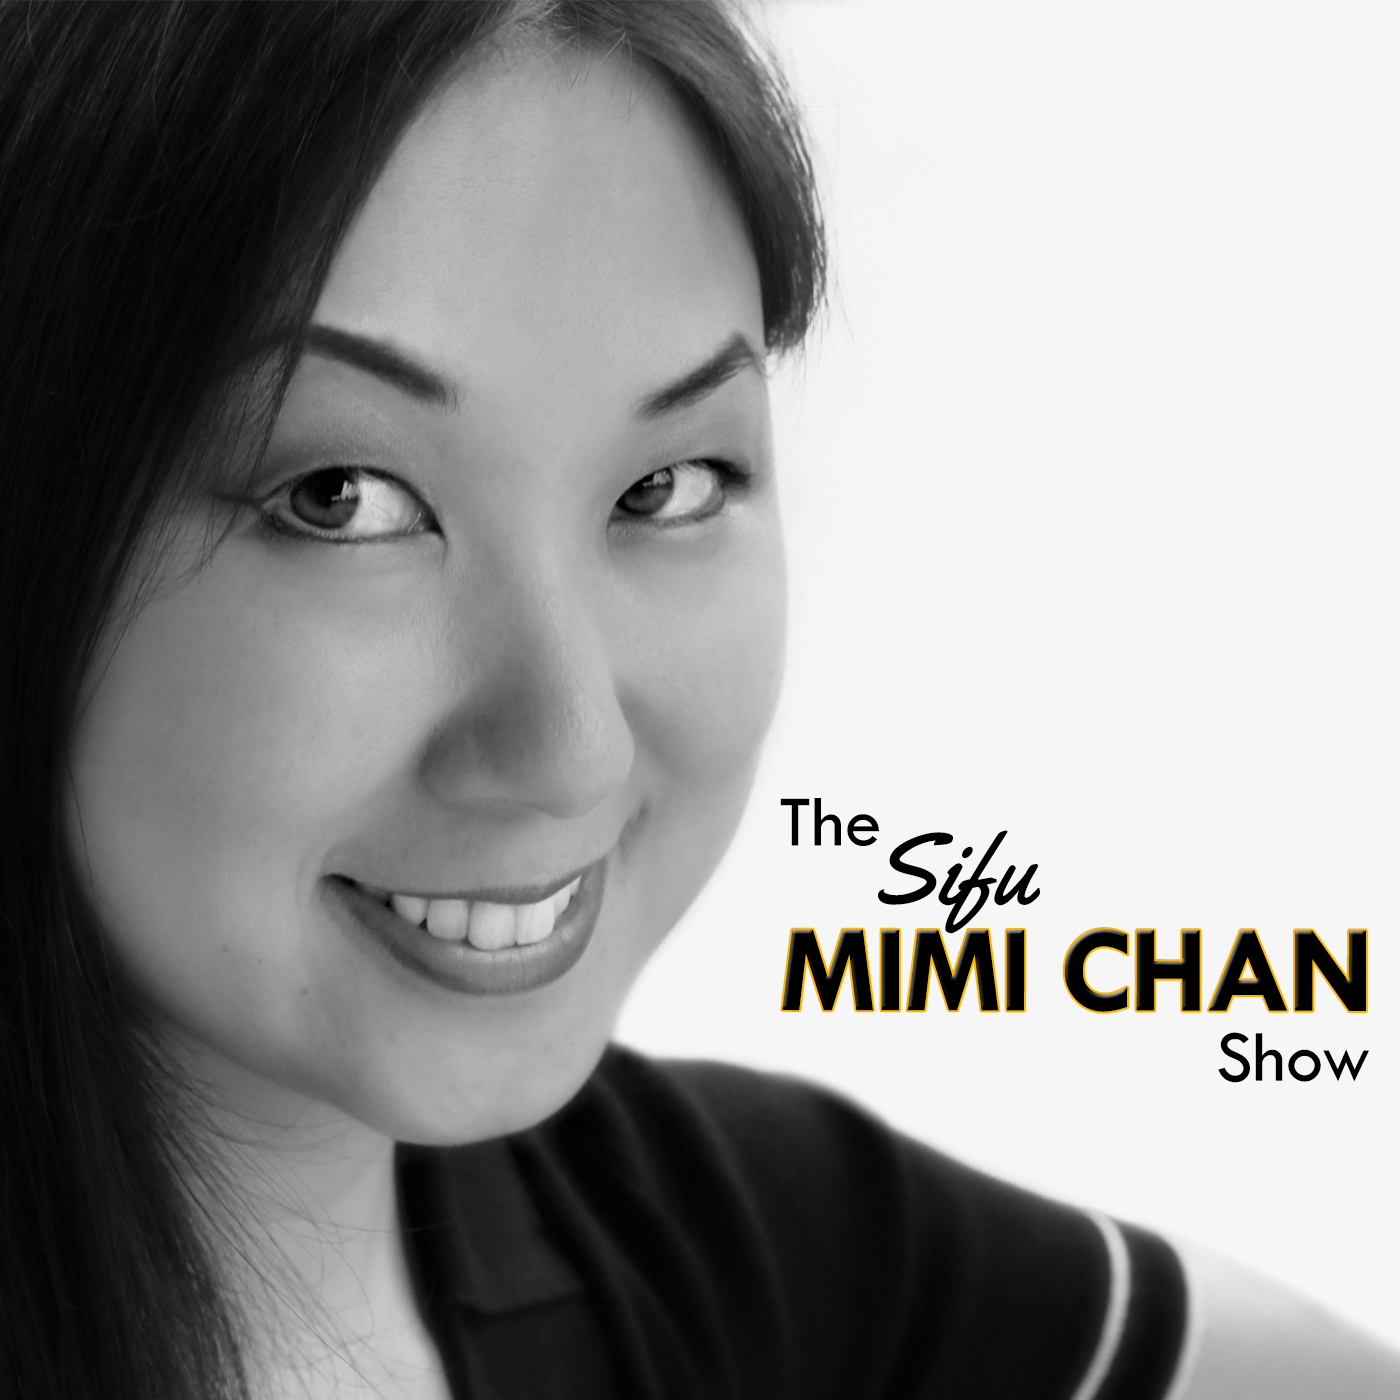 The Sifu Mimi Chan Show